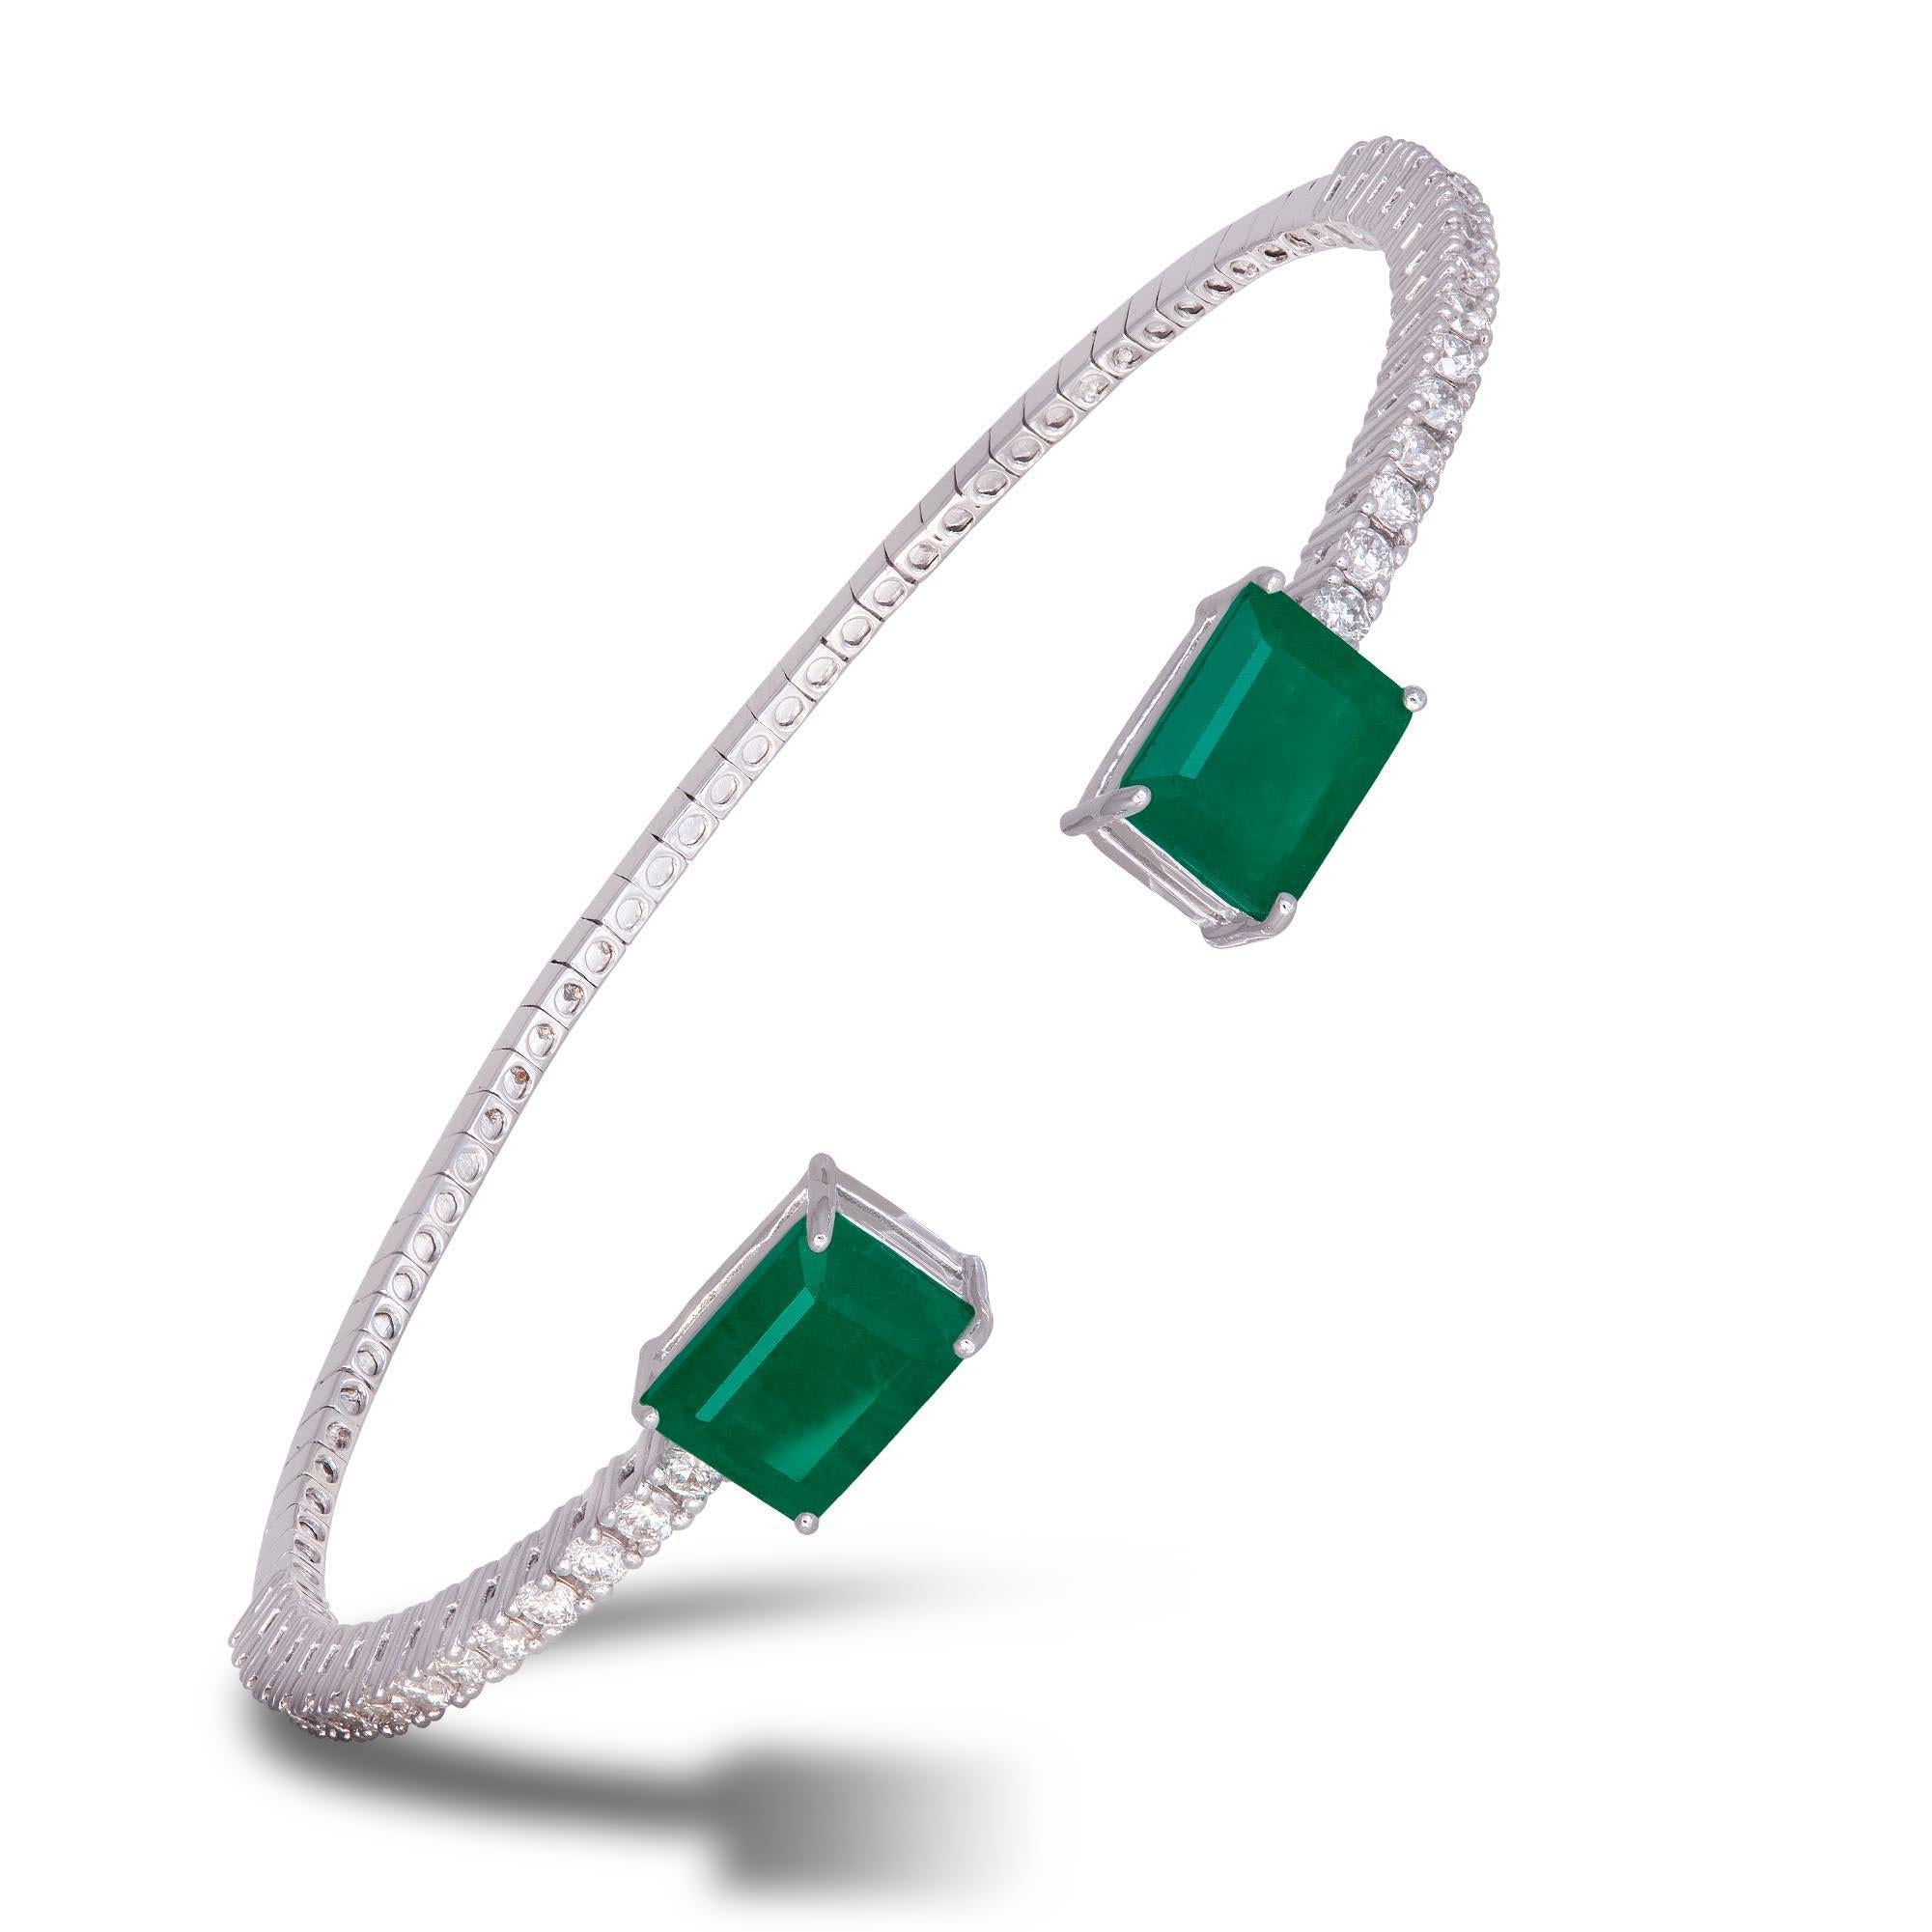 Emerald Cut Diamond Bangle Bracelet 18K White Gold Diamond 0.77 Cts/30 Pcs Emerald 3.18 Cts For Sale